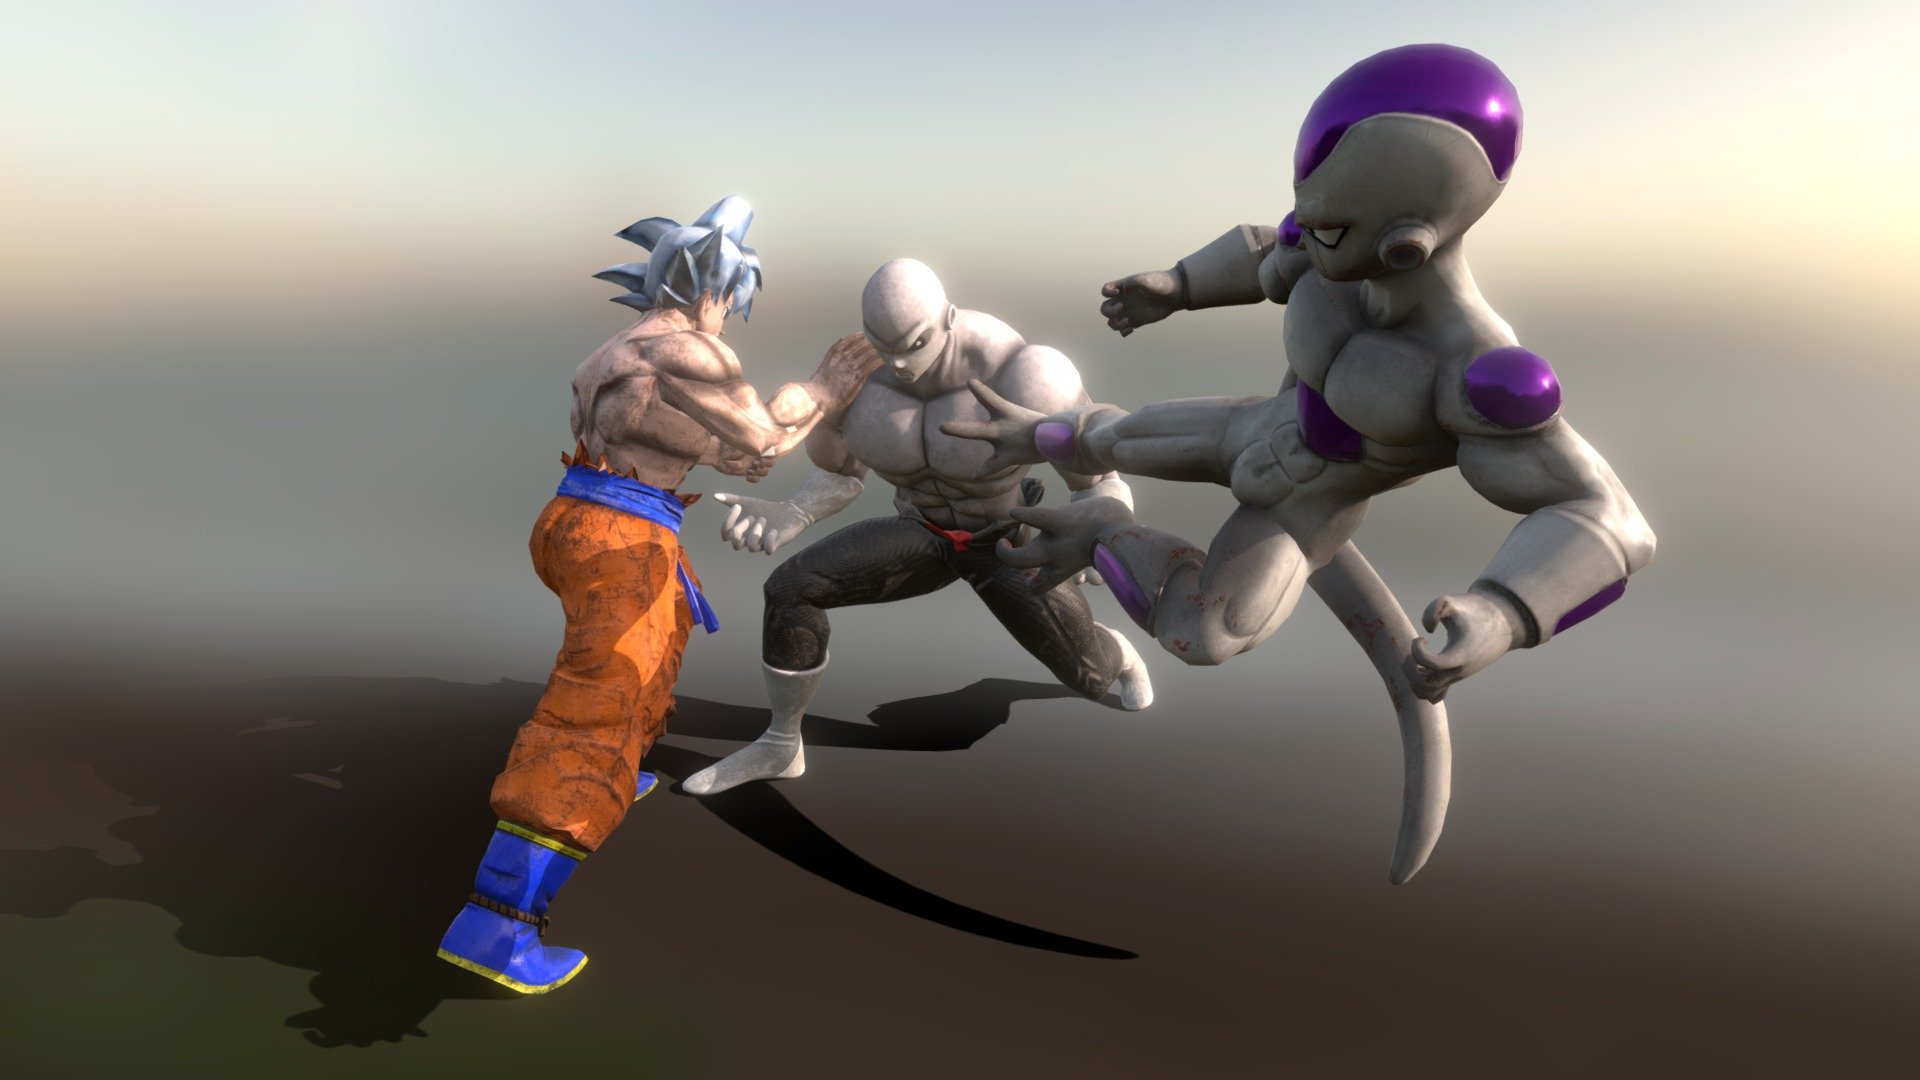 Goku vs Jiren vs Freezer - 3D model by Krlts (@Krlts) [517121a]